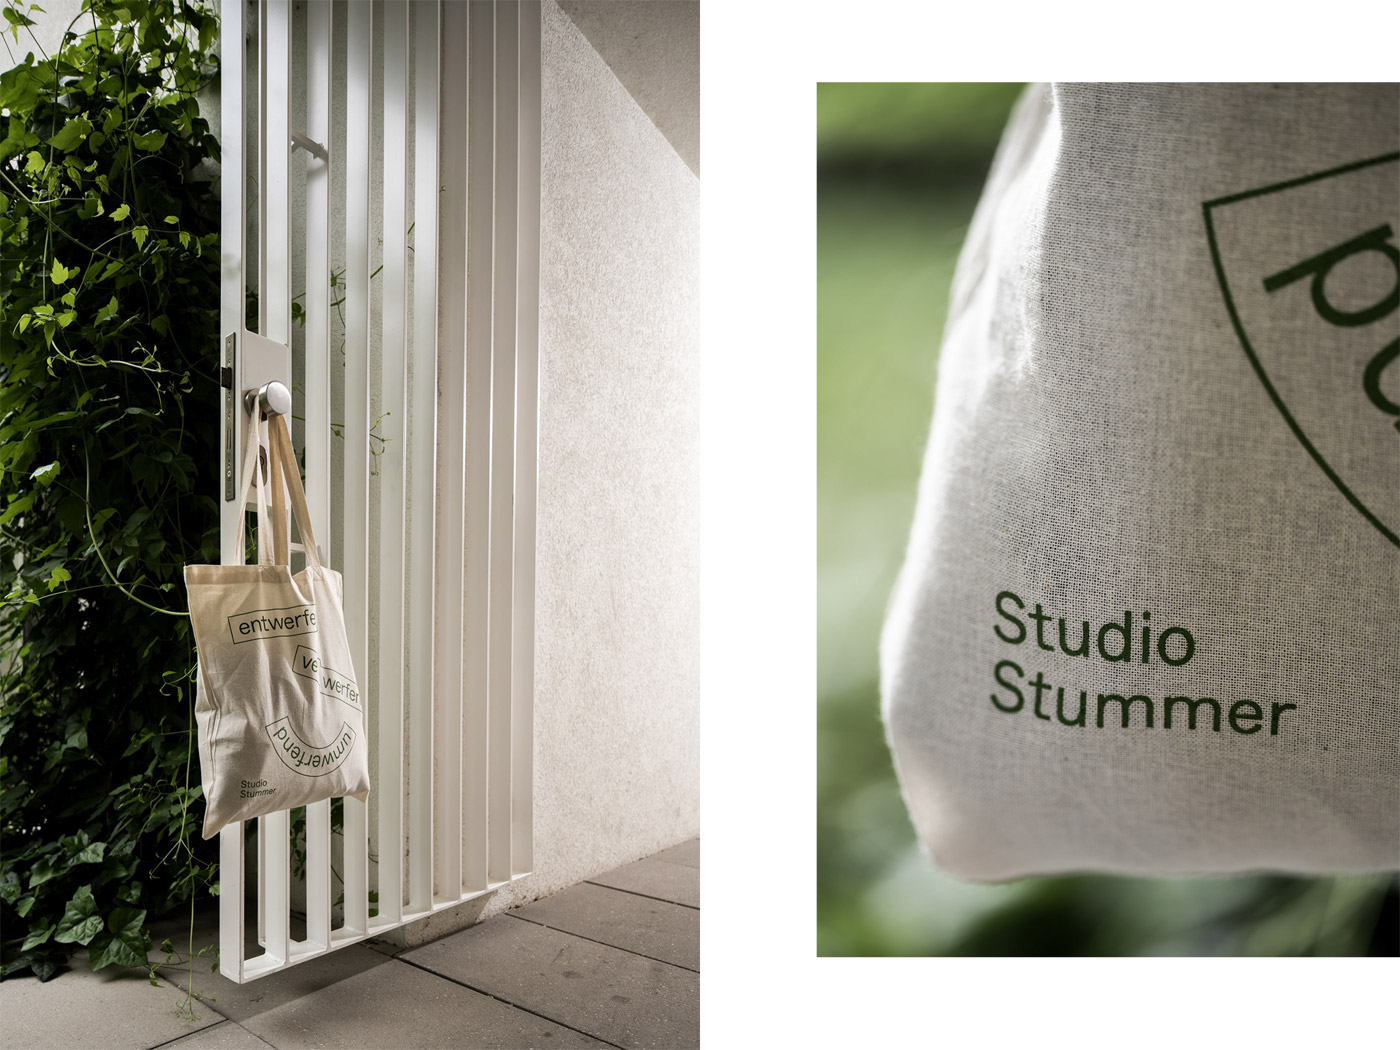 Studio Stummer branding by agency Gletscher.